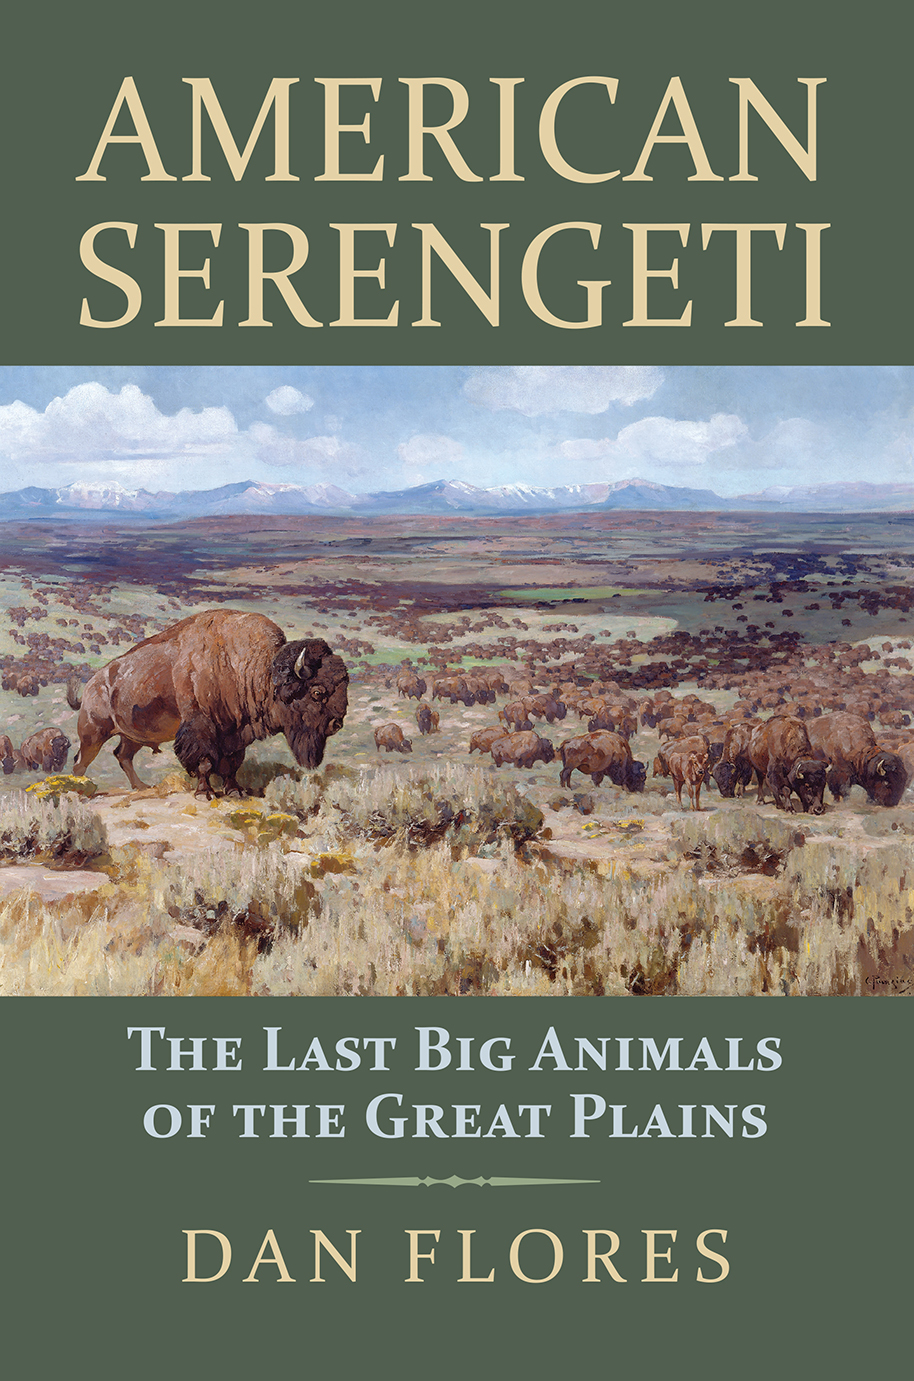 "American Serengeti"